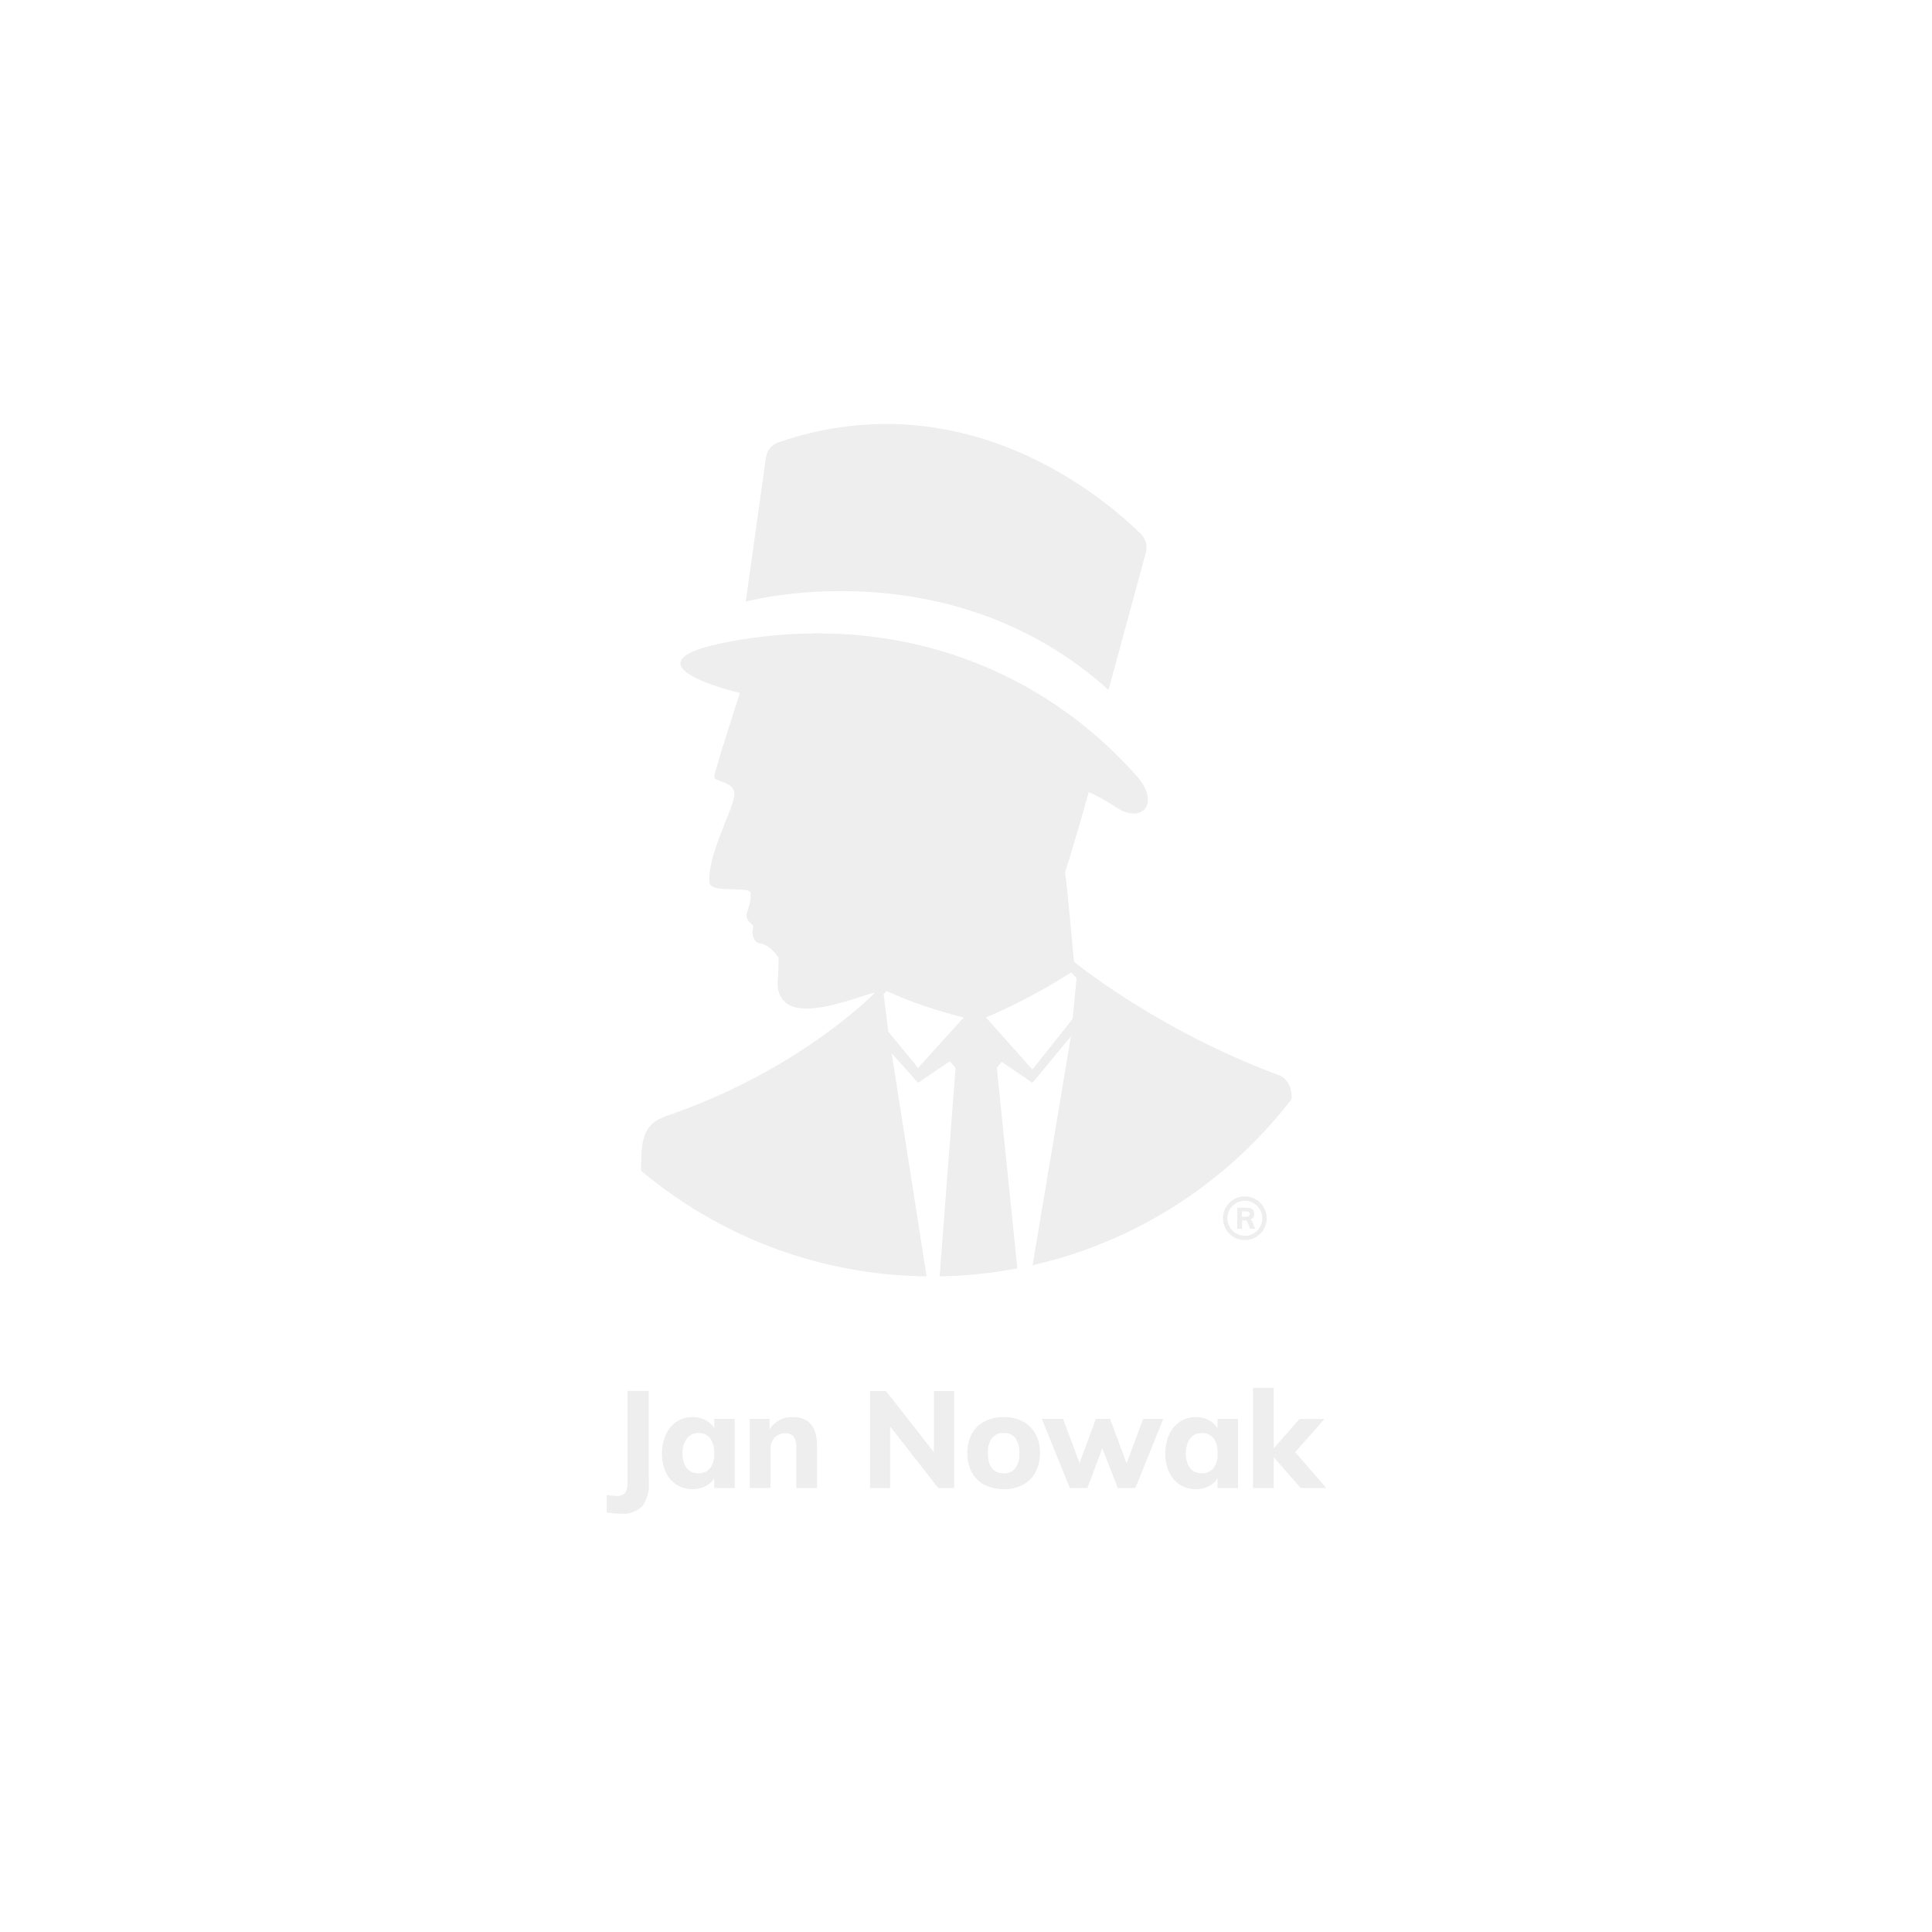 JAN NOWAK model FILIP II 900x1850x400 biurowa szafa metalowa z sejfem na akta i dokumenty: szara